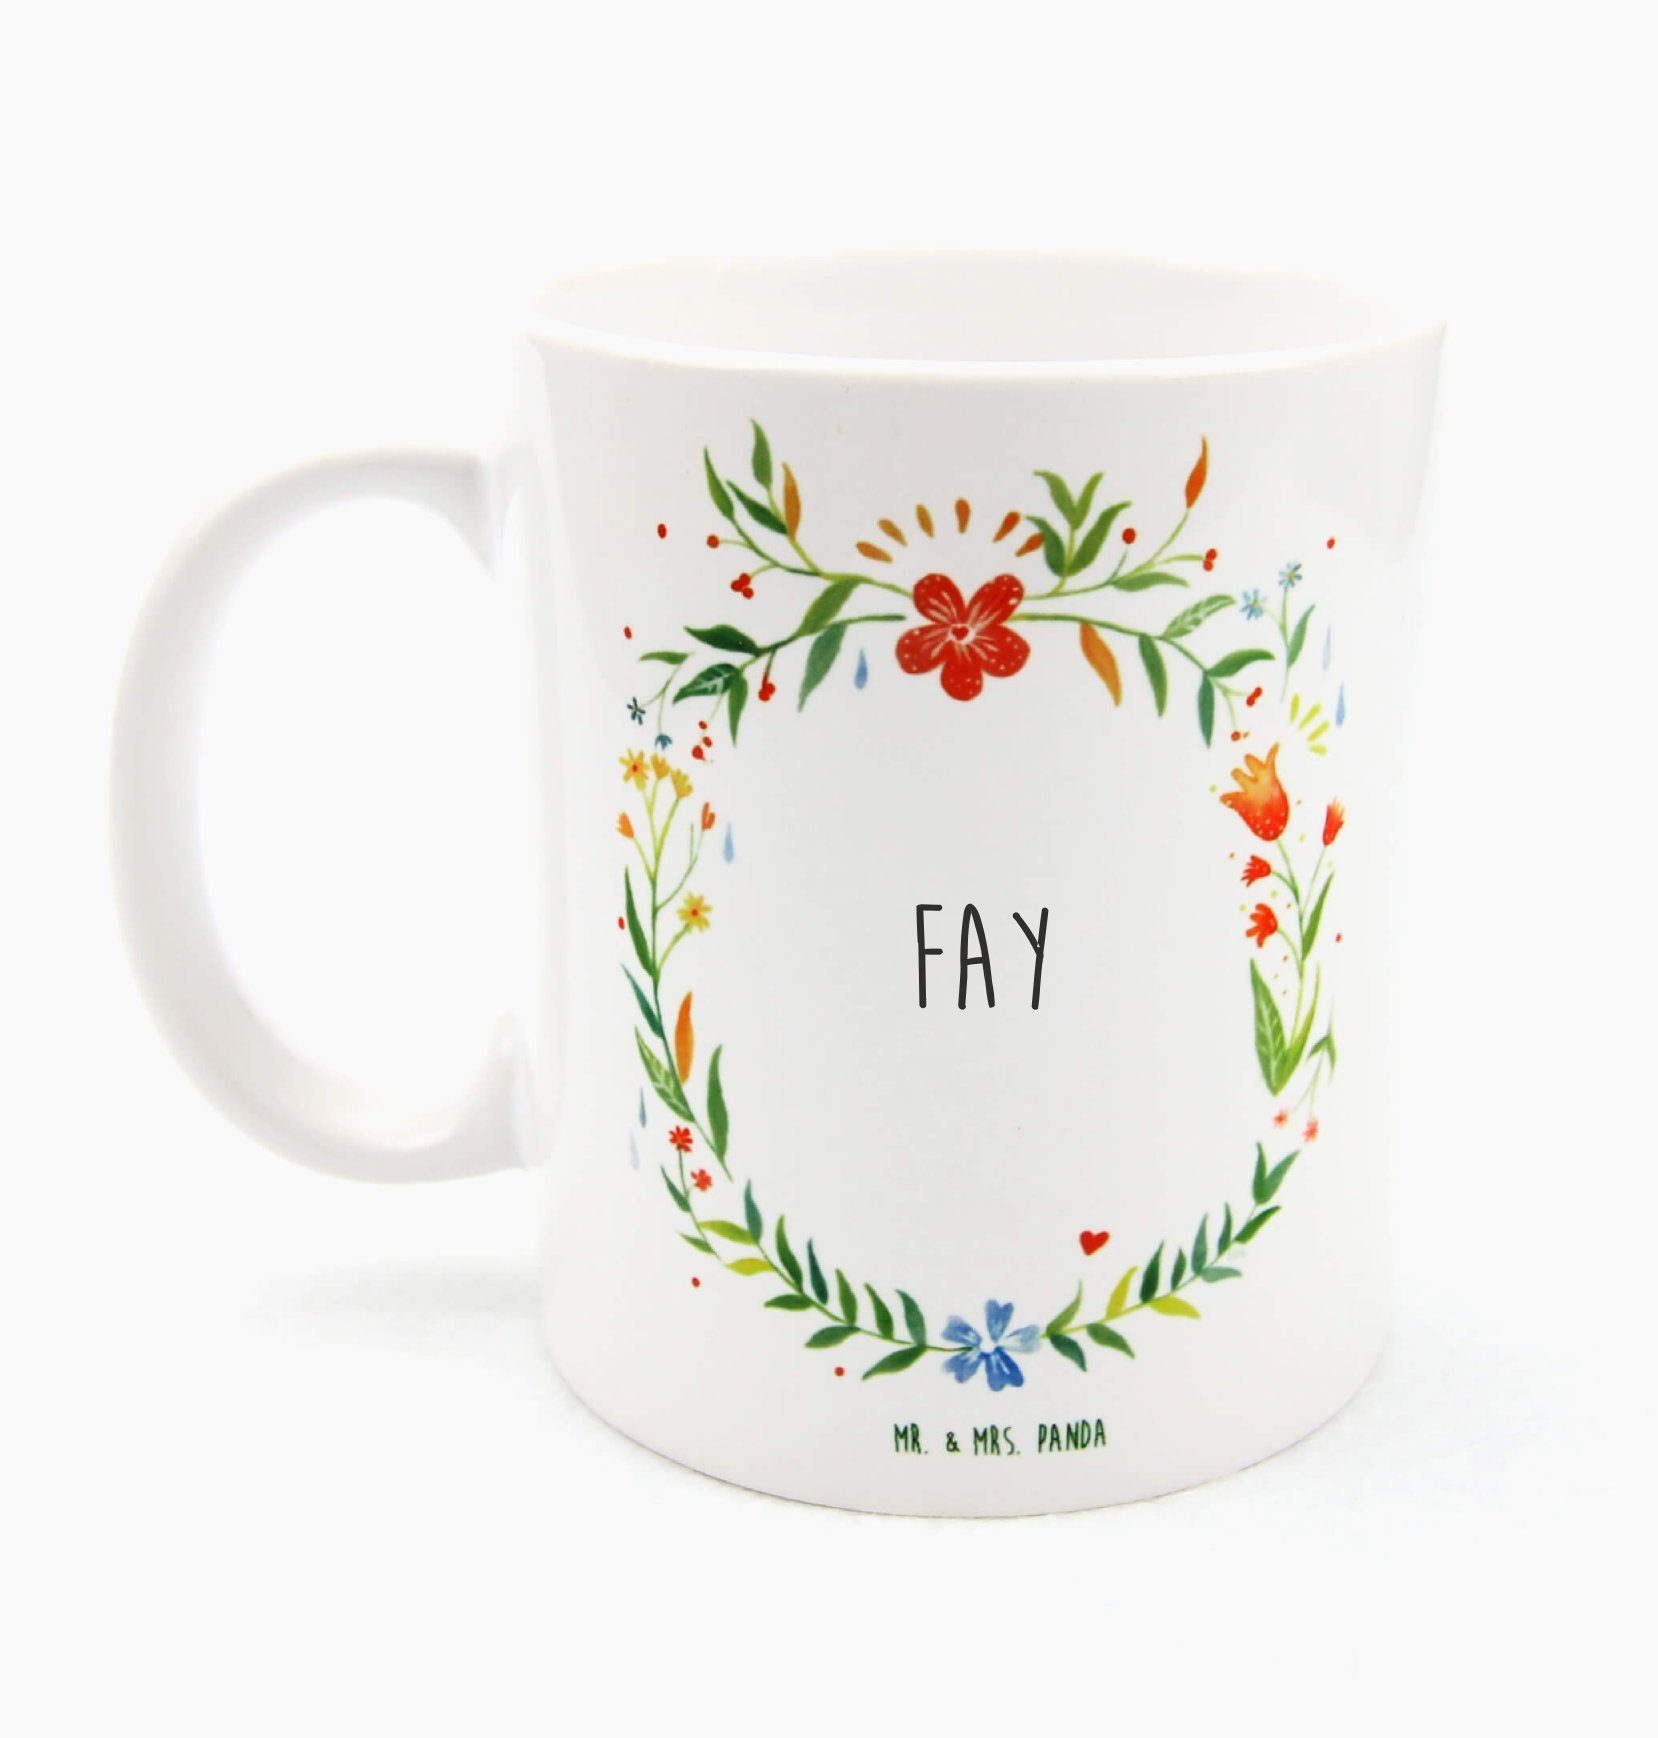 Tasse, Porzellantasse, Mrs. Sprüche, Te, - Kaffeetasse, Geschenk, Tasse & Keramik Panda Tasse Mr. Fay